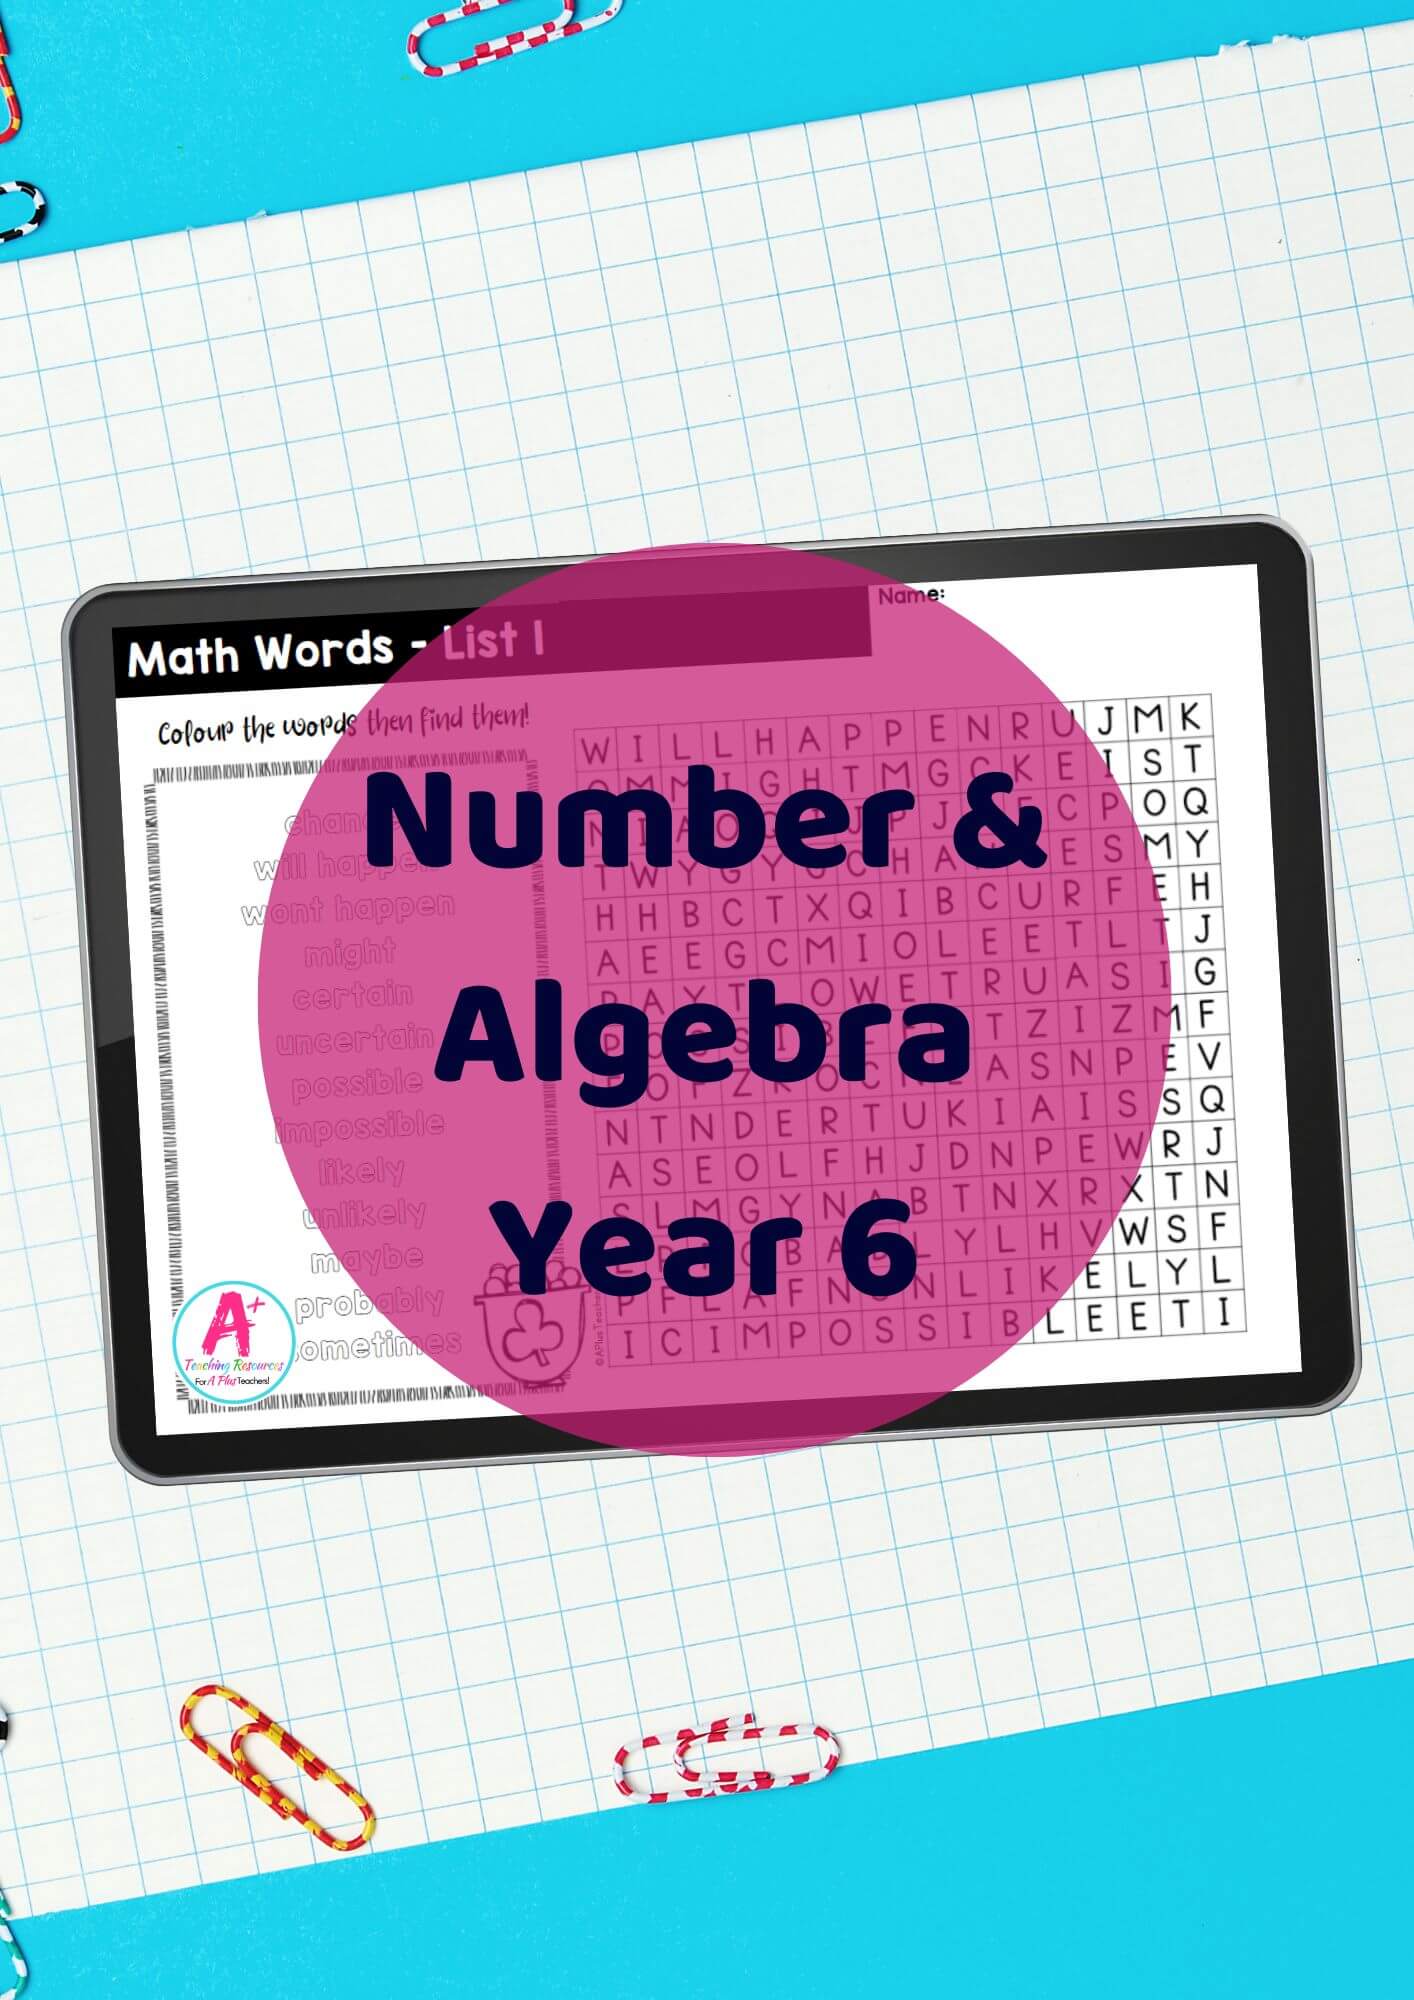 Number & Algebra Vocabulary POWERPOINT - Year 6